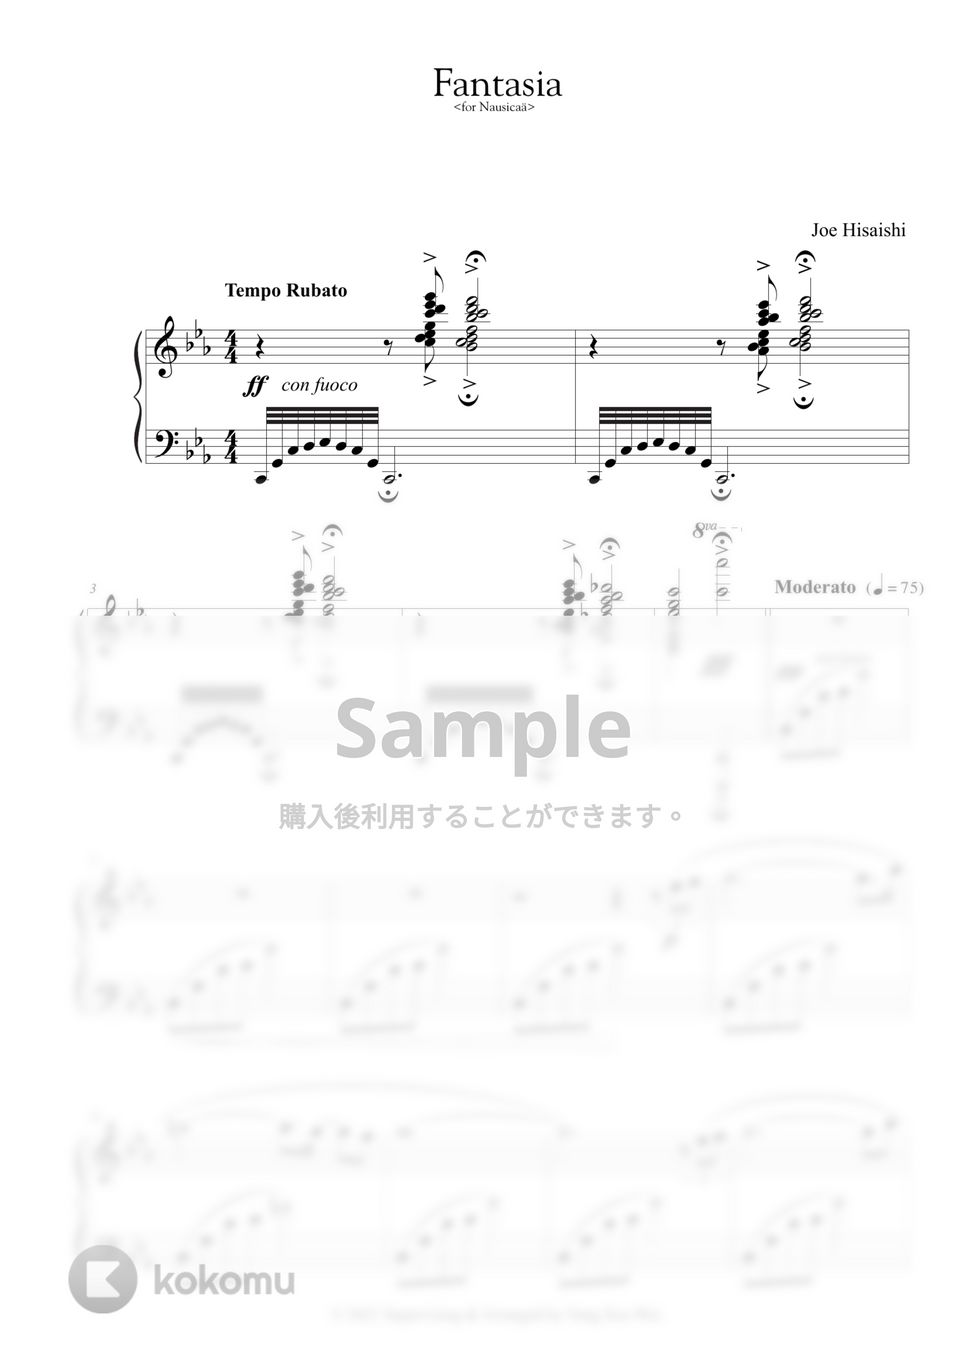 久石譲 - Fantasia (for Nausicaa) (原典版) by 楊思緯